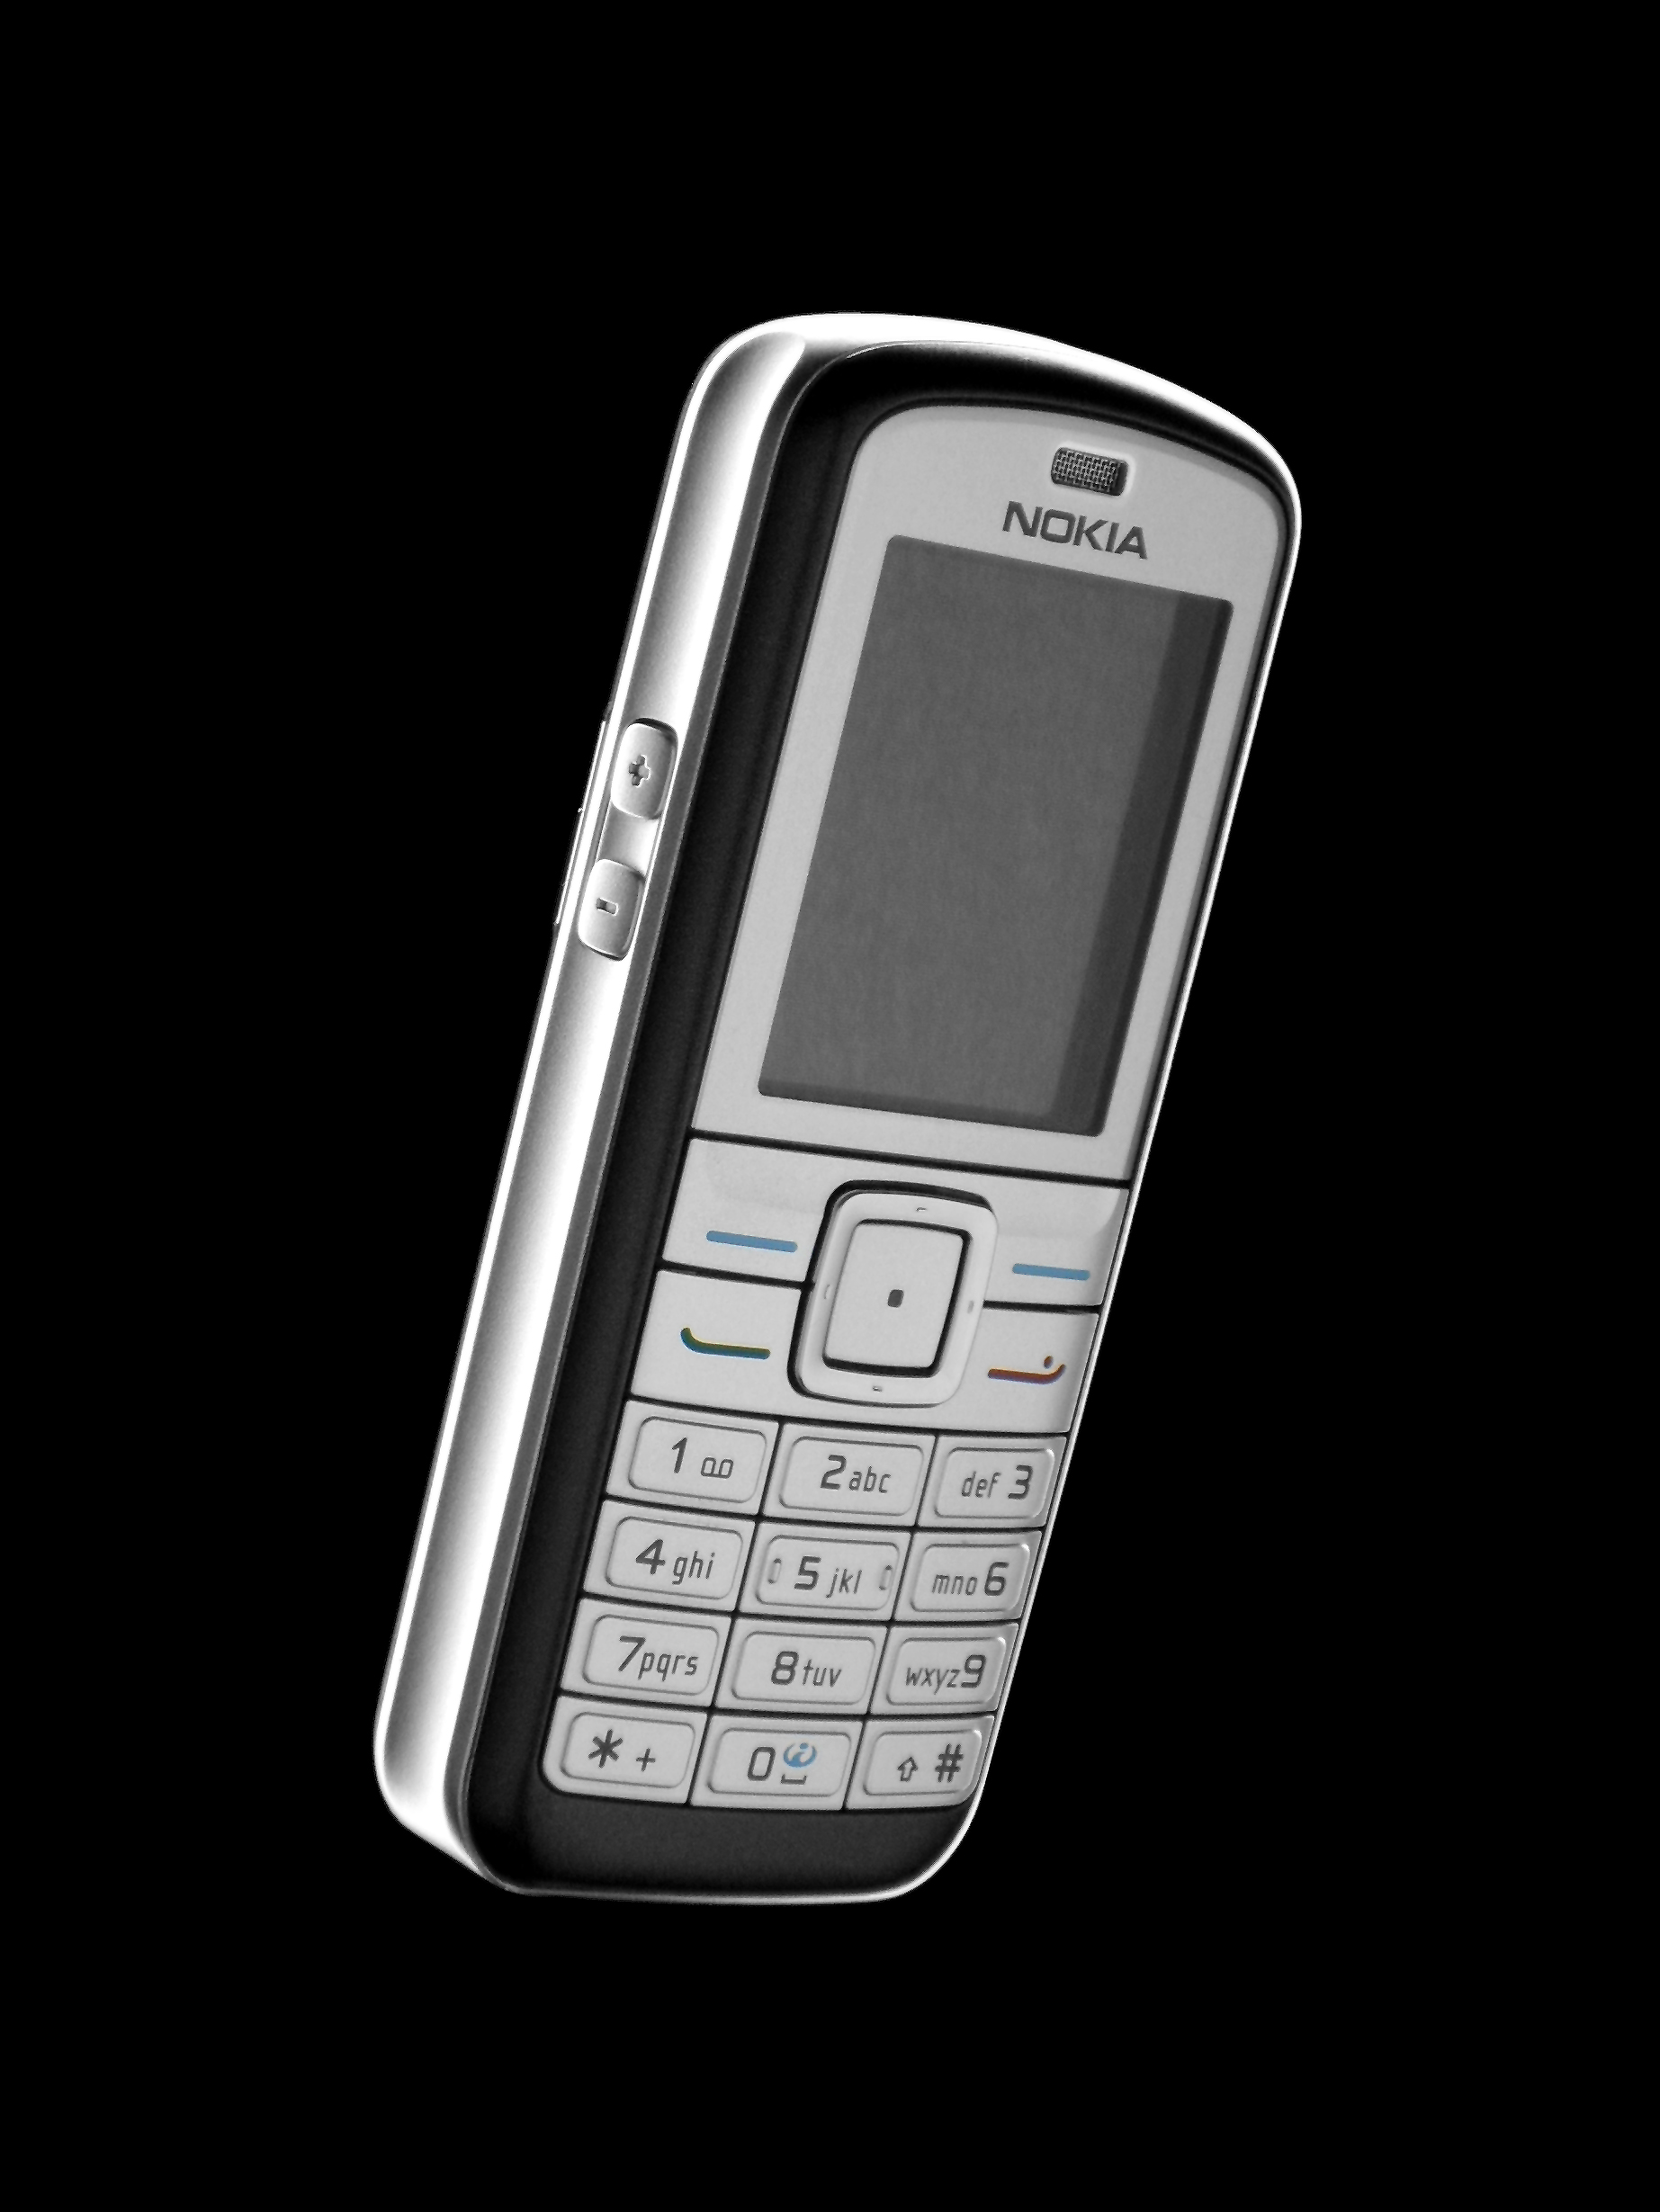 File:Nokia 6070 black background.jpg - Wikimedia Commons